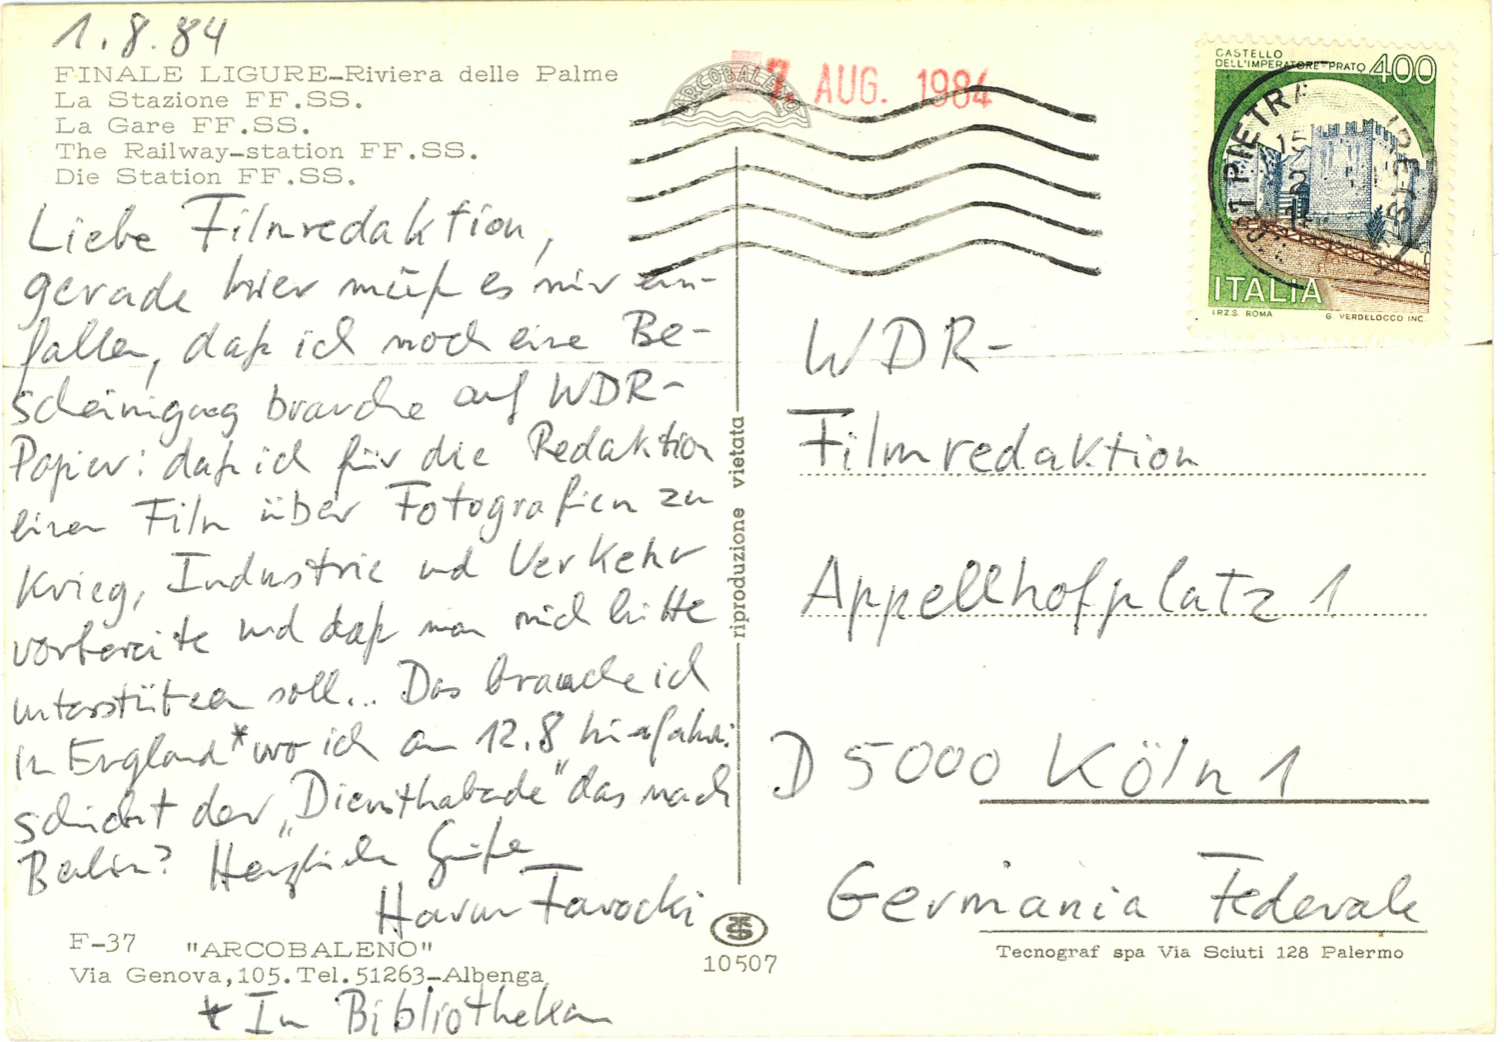 Postkarte Filmredaktion 1984 recto